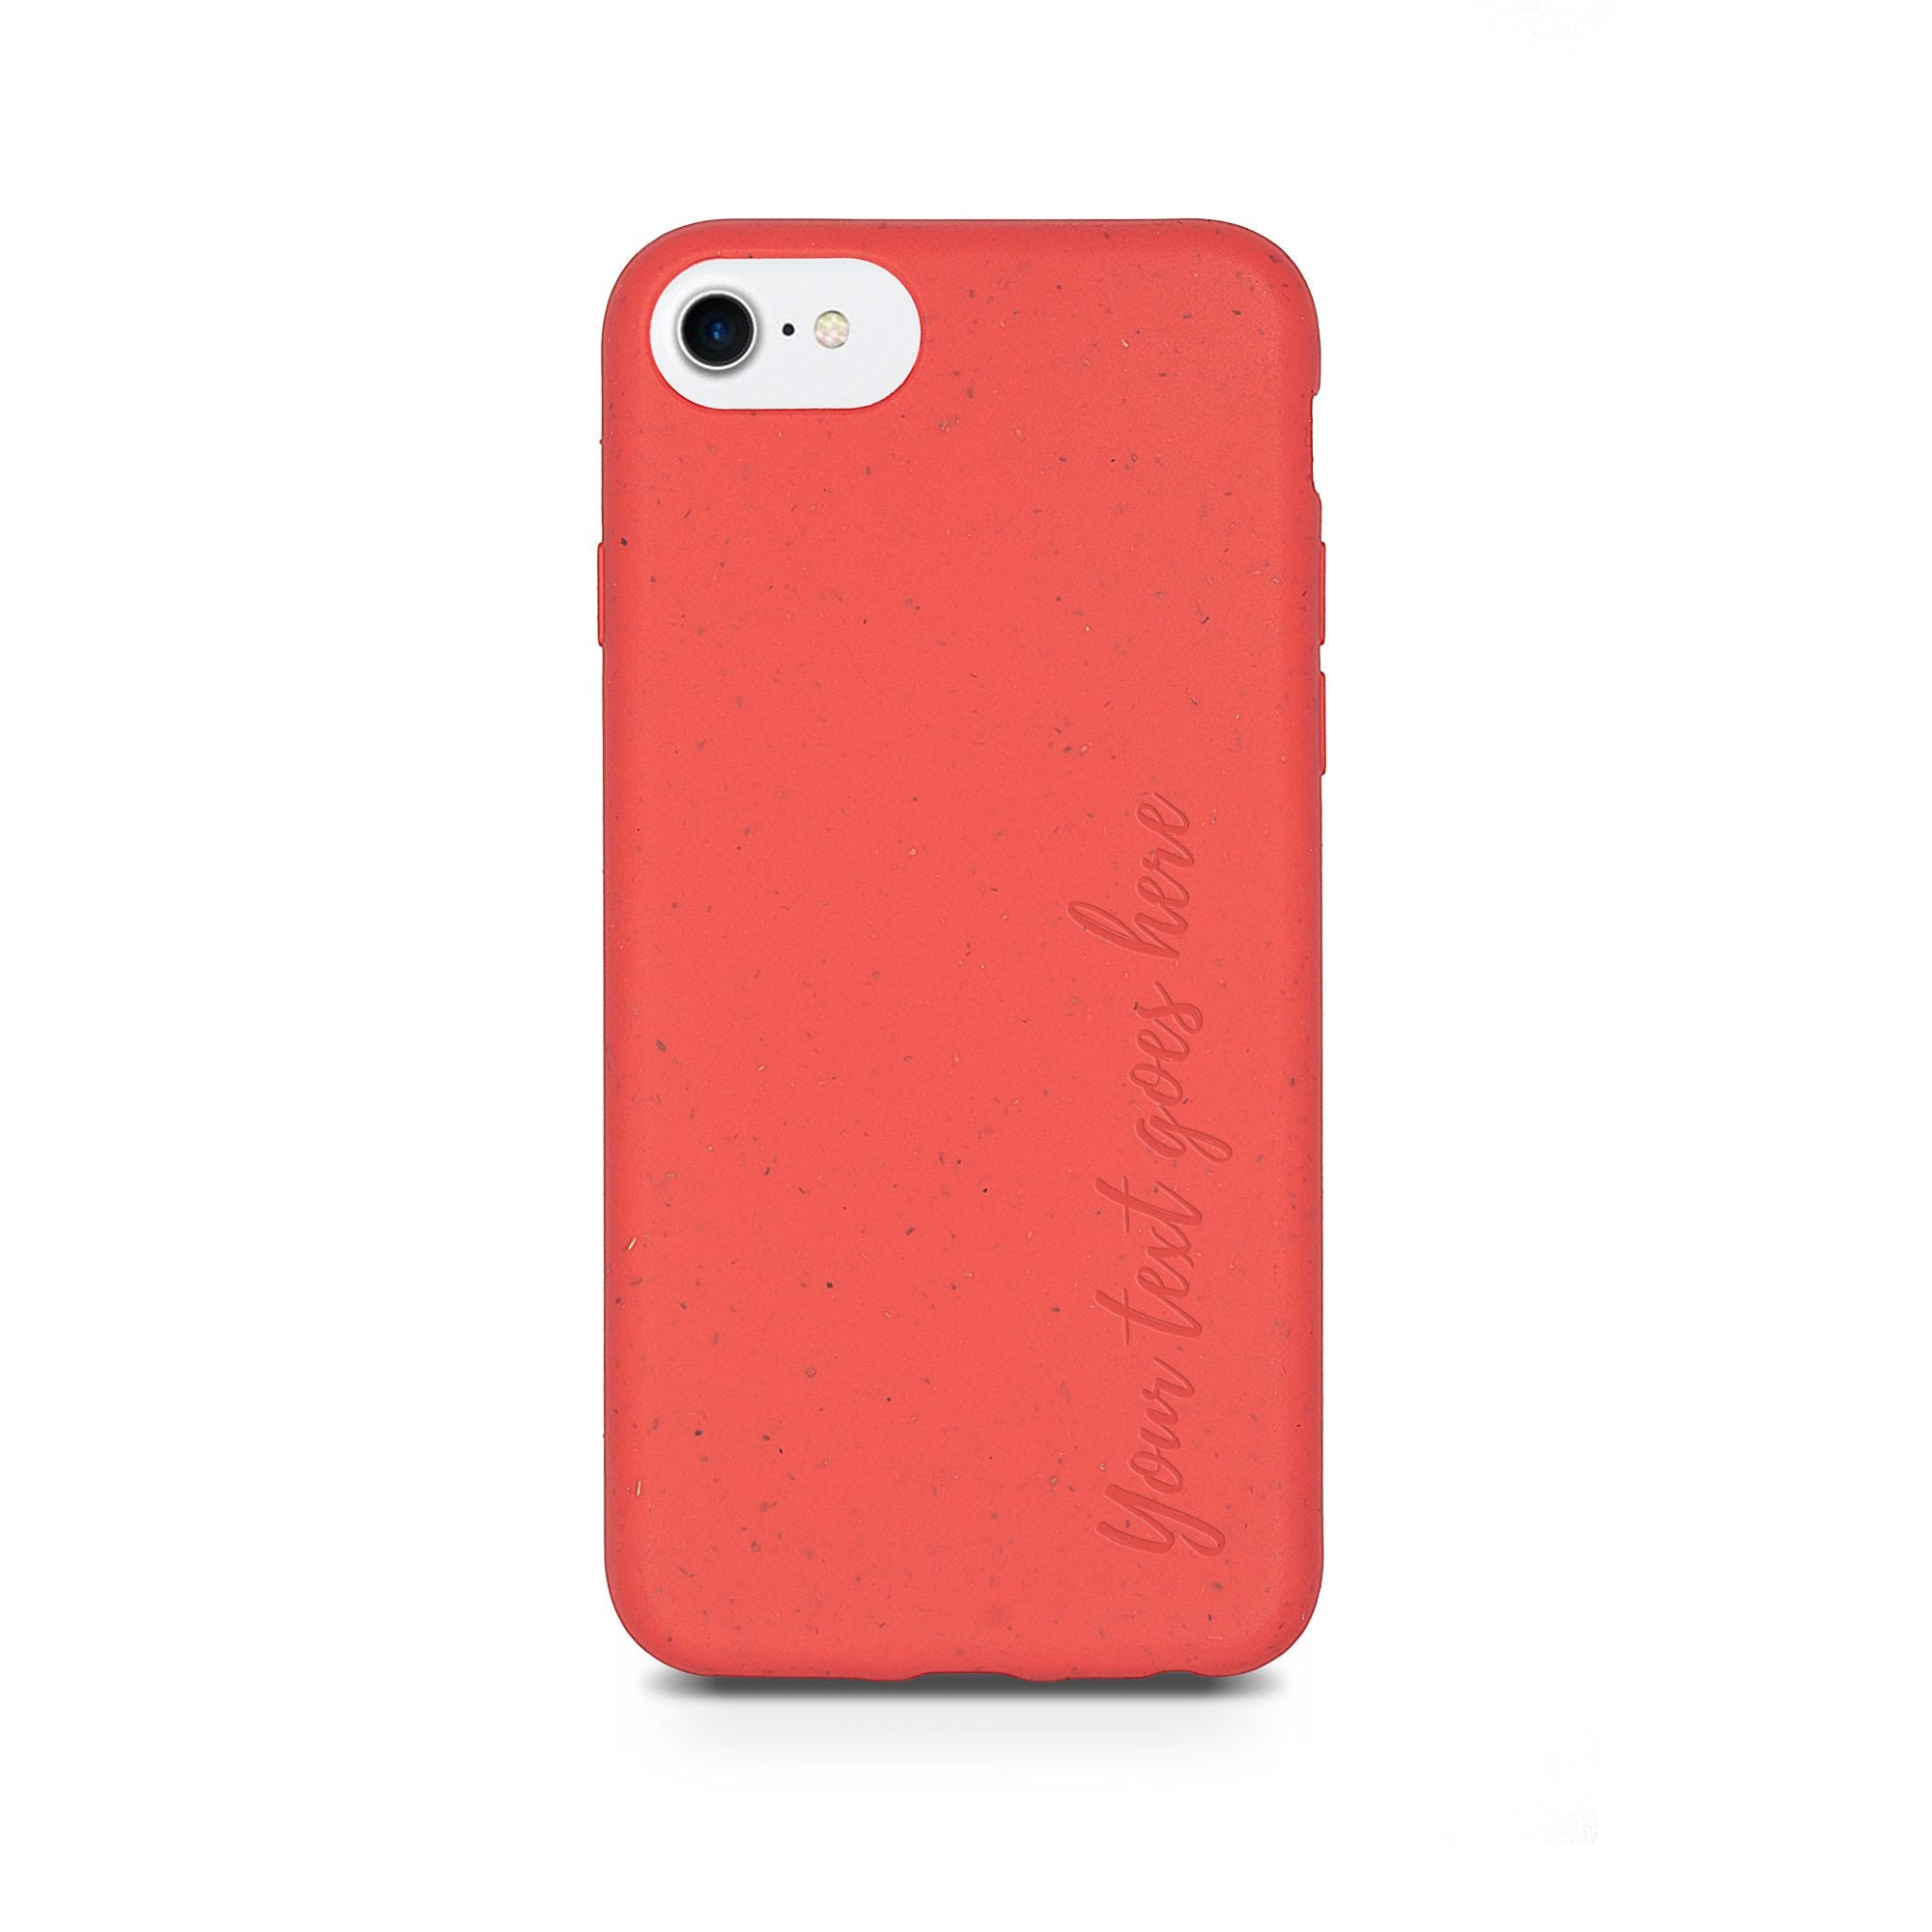 Funda para iPhone 7 roja con texto personalizado vertical ecológico